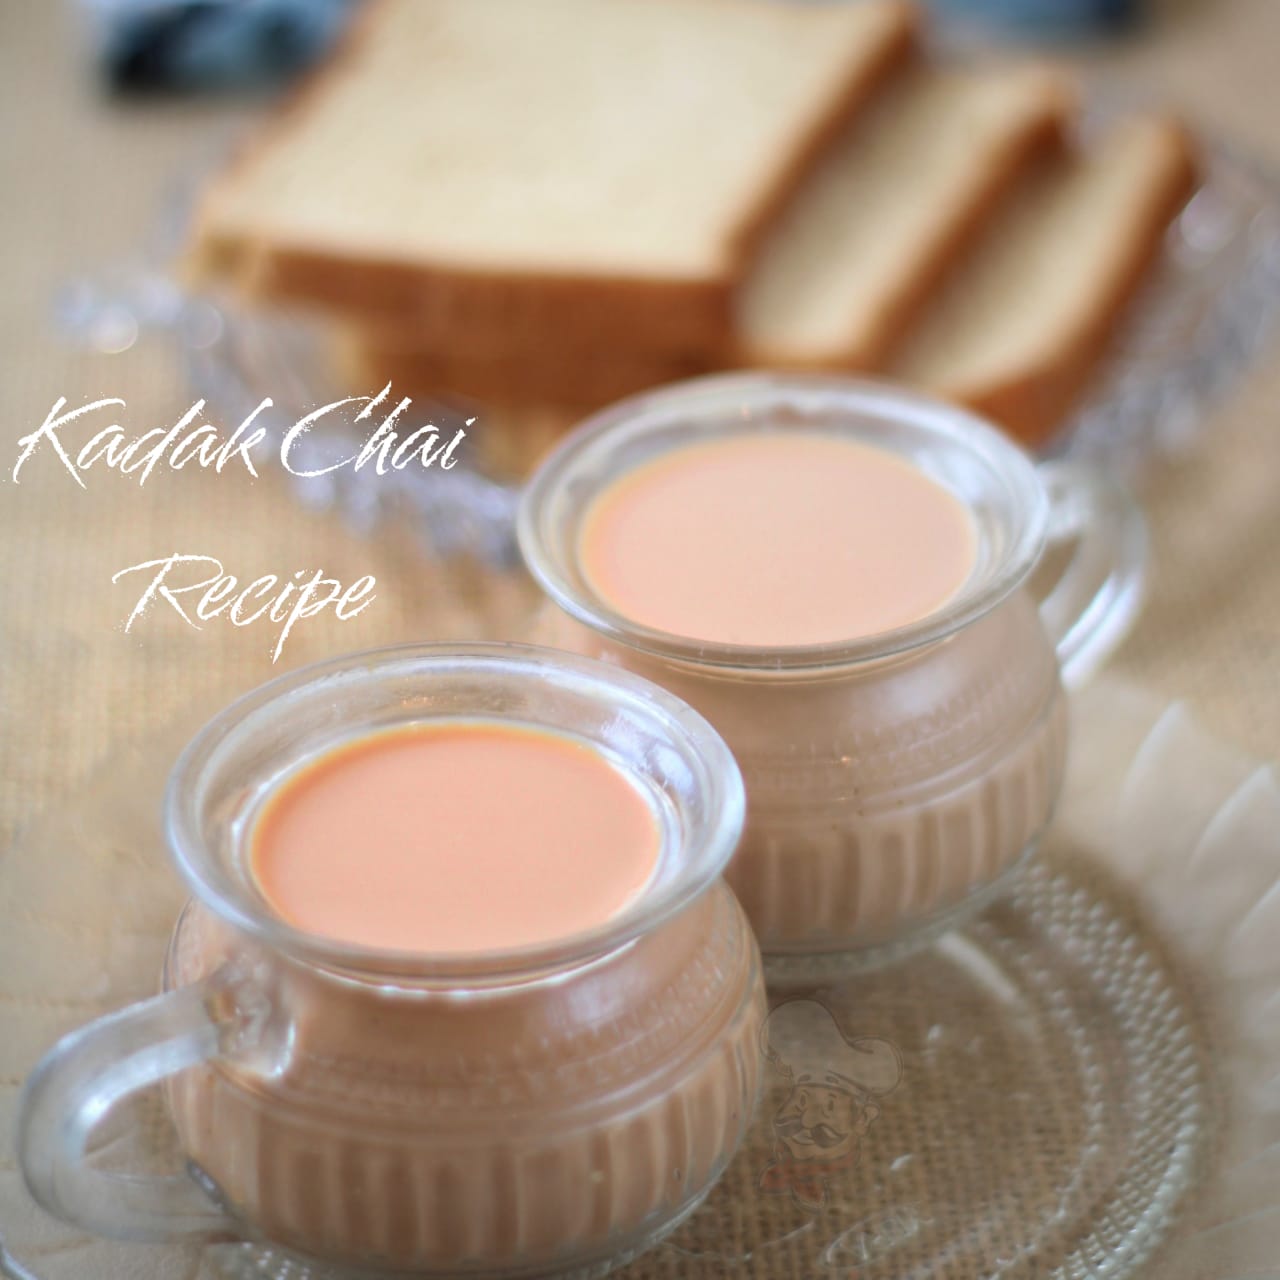 kadak chai recipe